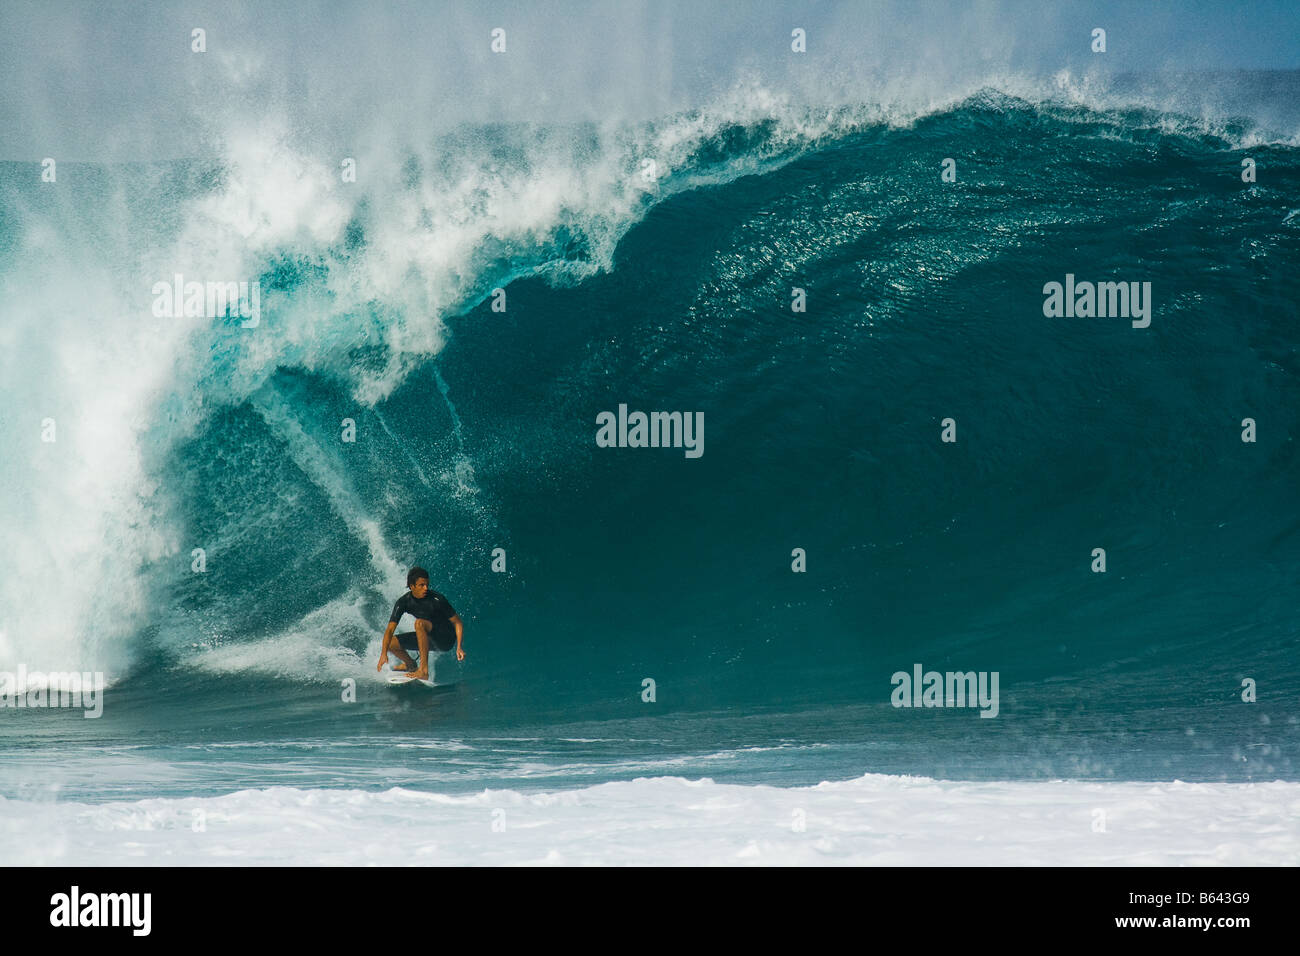 Surfer riding enorme ondata, Bonzai Pipeline, North Shore Oahu, Hawaii Foto Stock